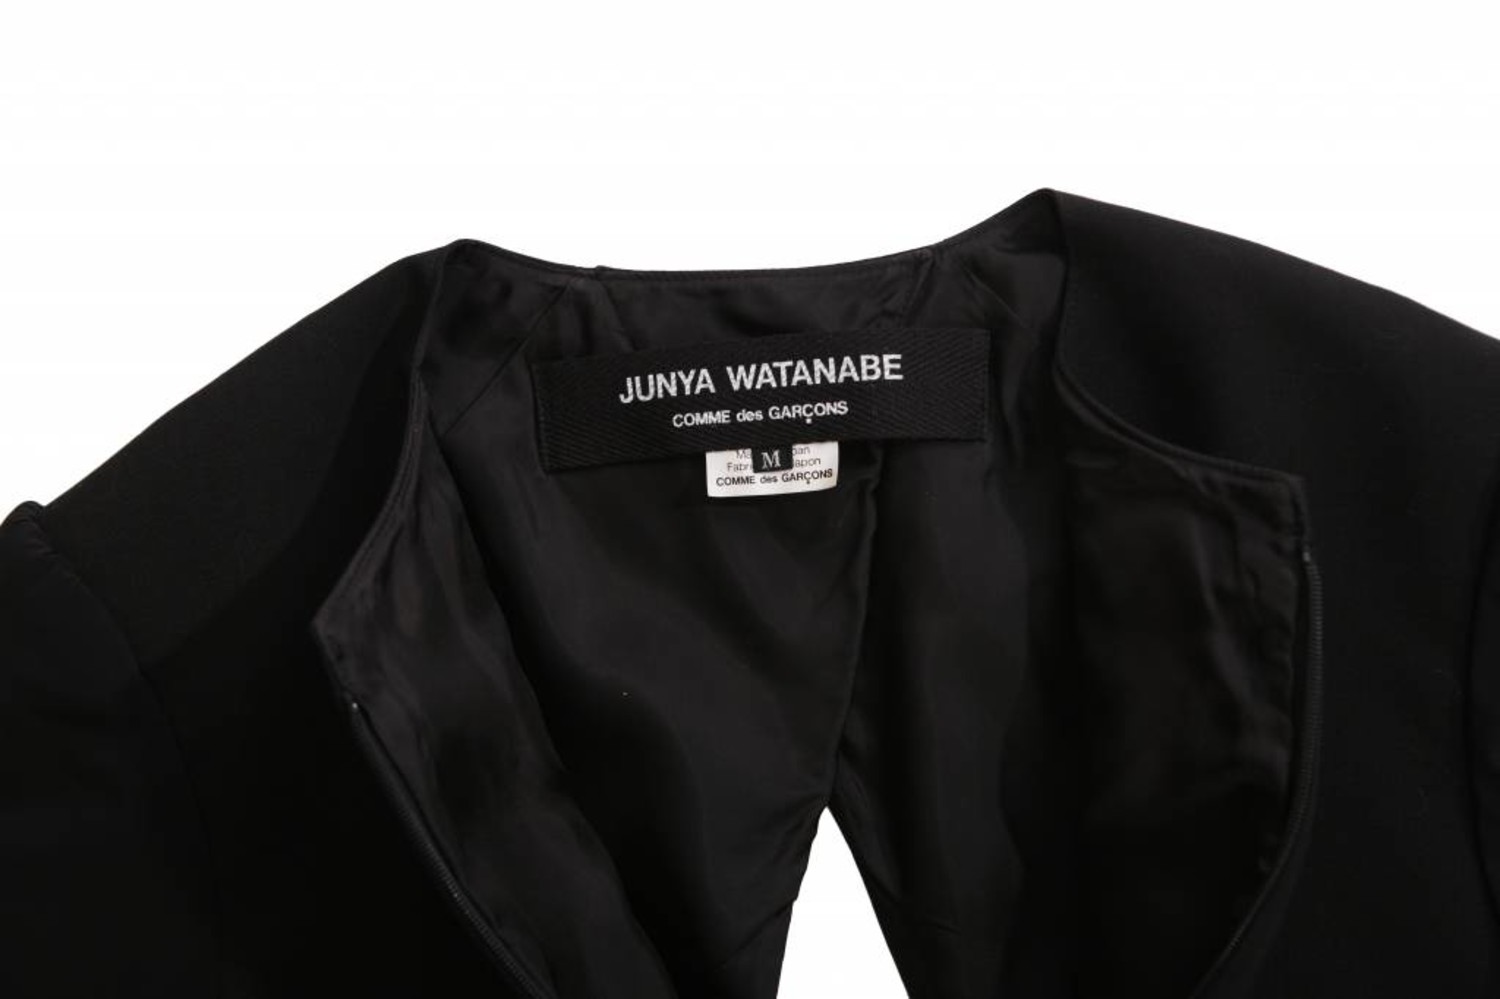 Junya Watanabe/Comme garçons, black dress with open back in M. - Unique Designer Pieces